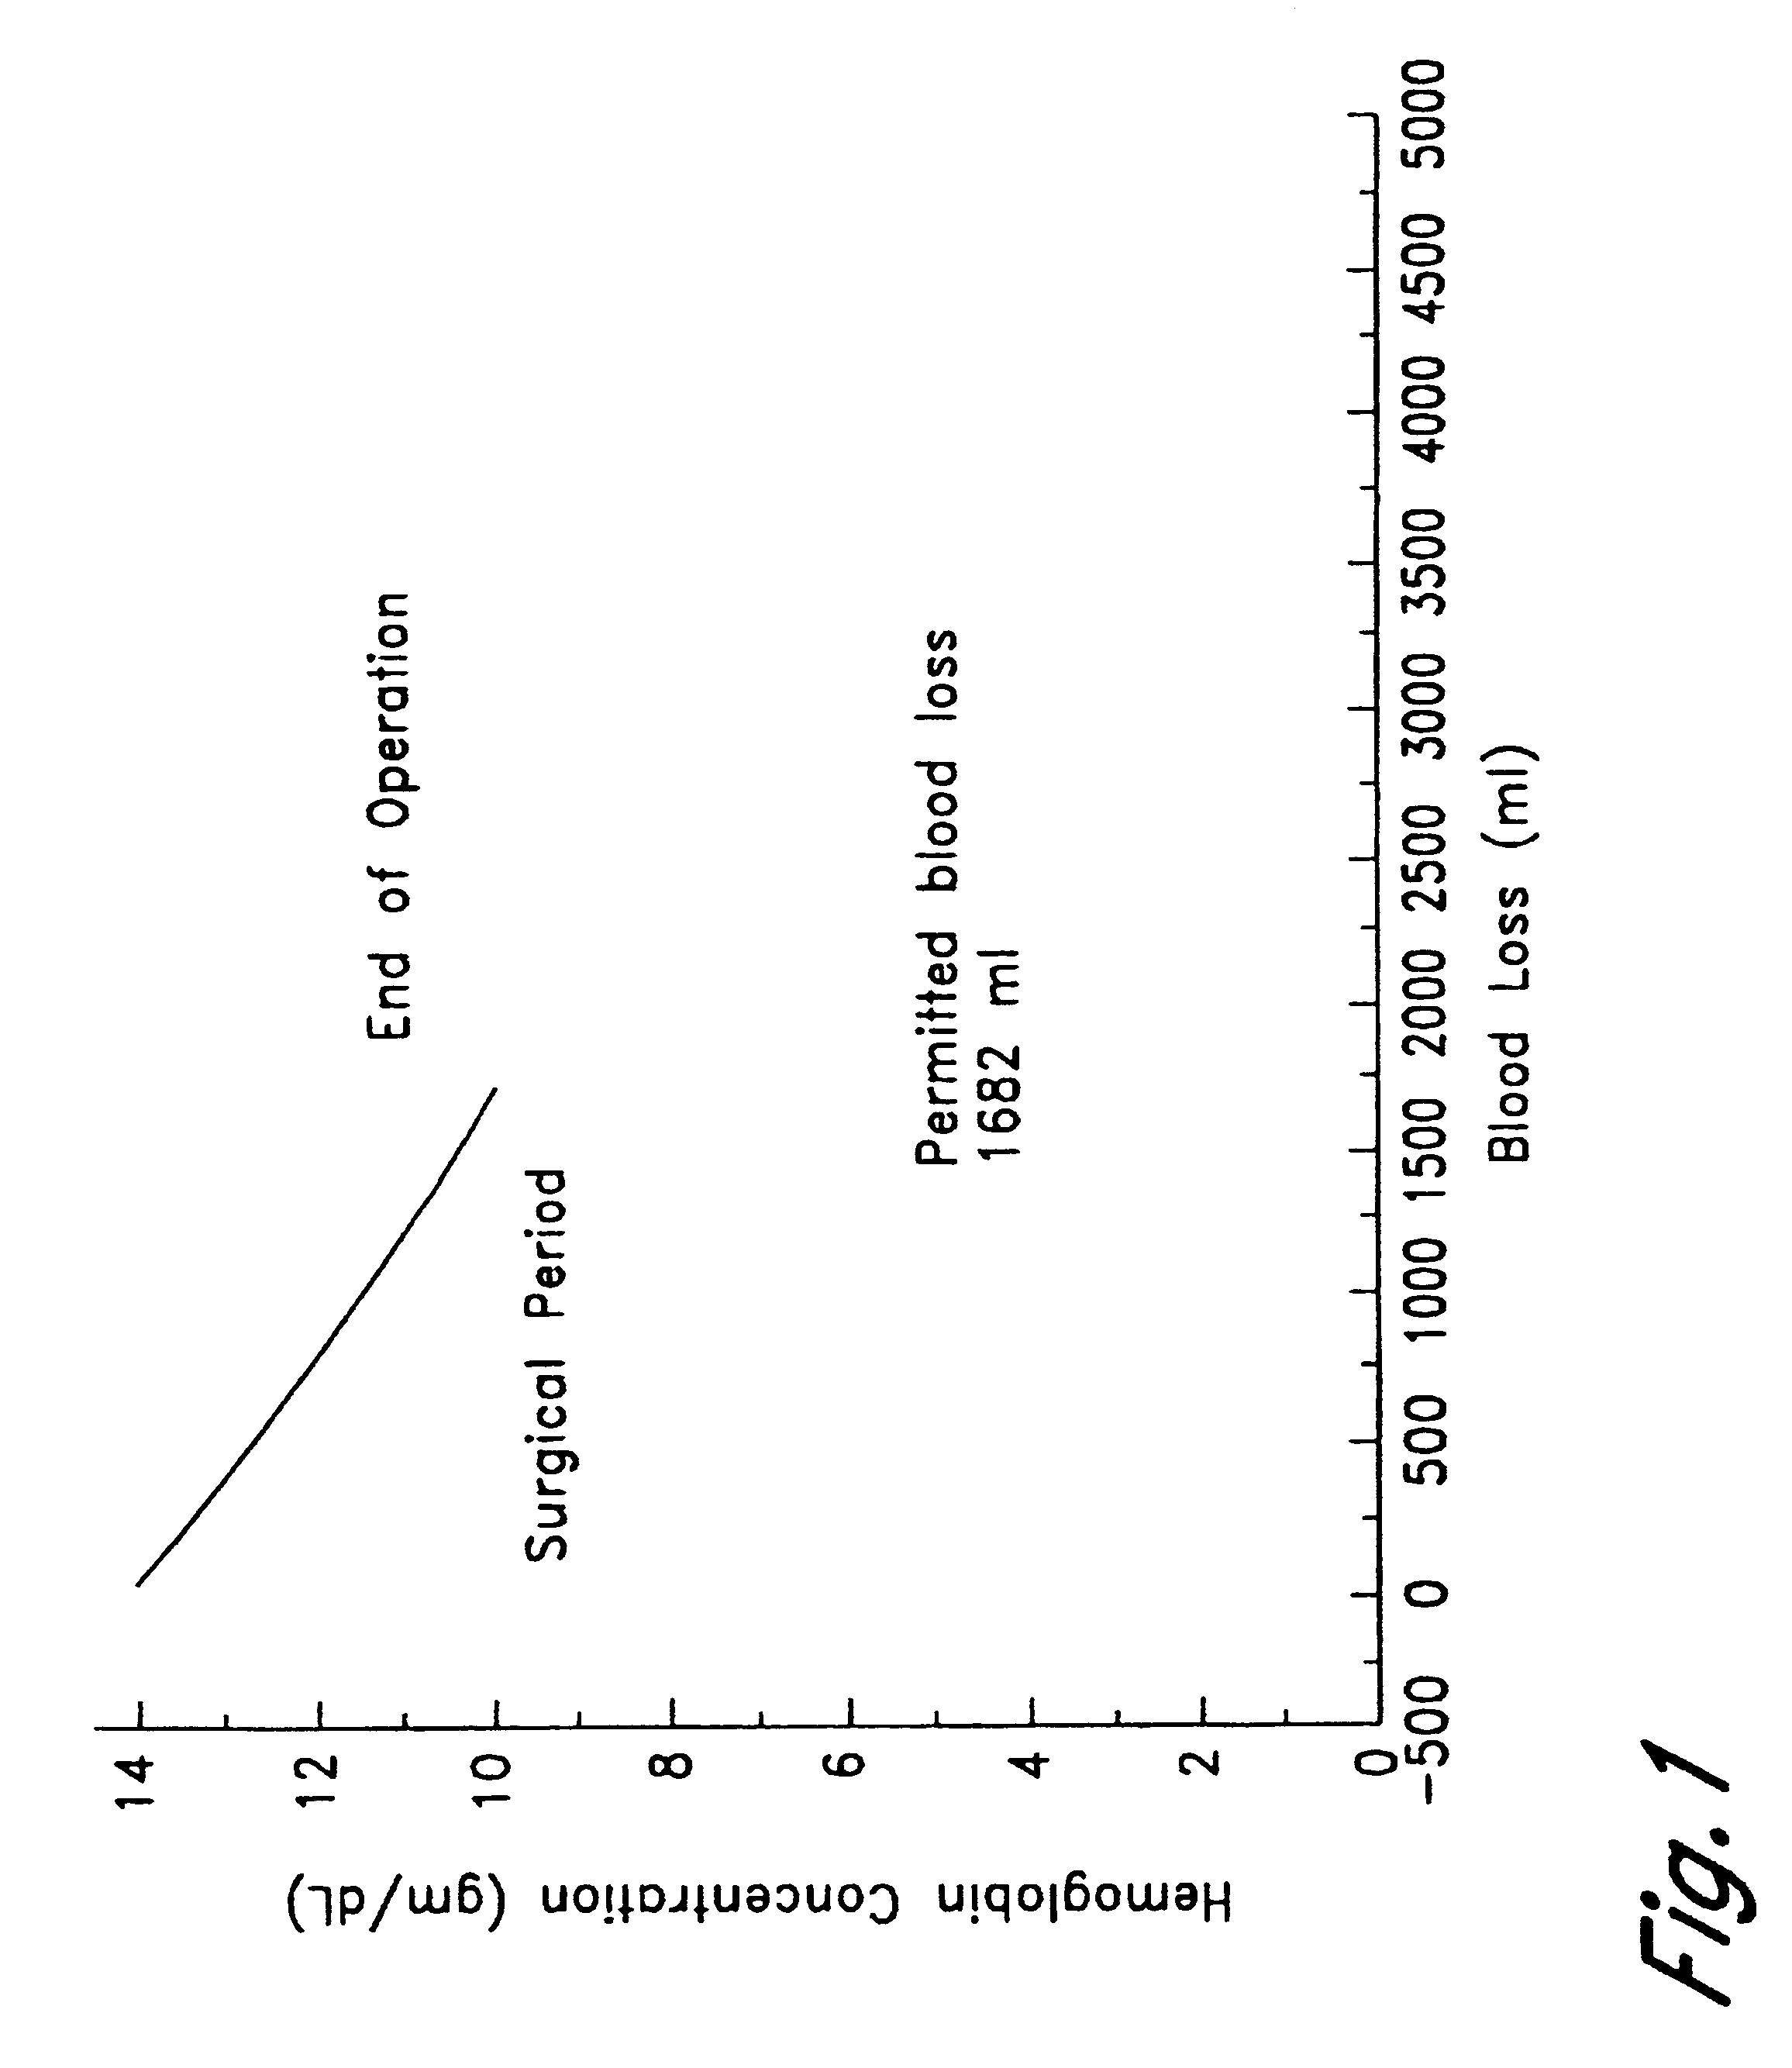 Method of hemodilution facilitated by monitoring oxygenation status